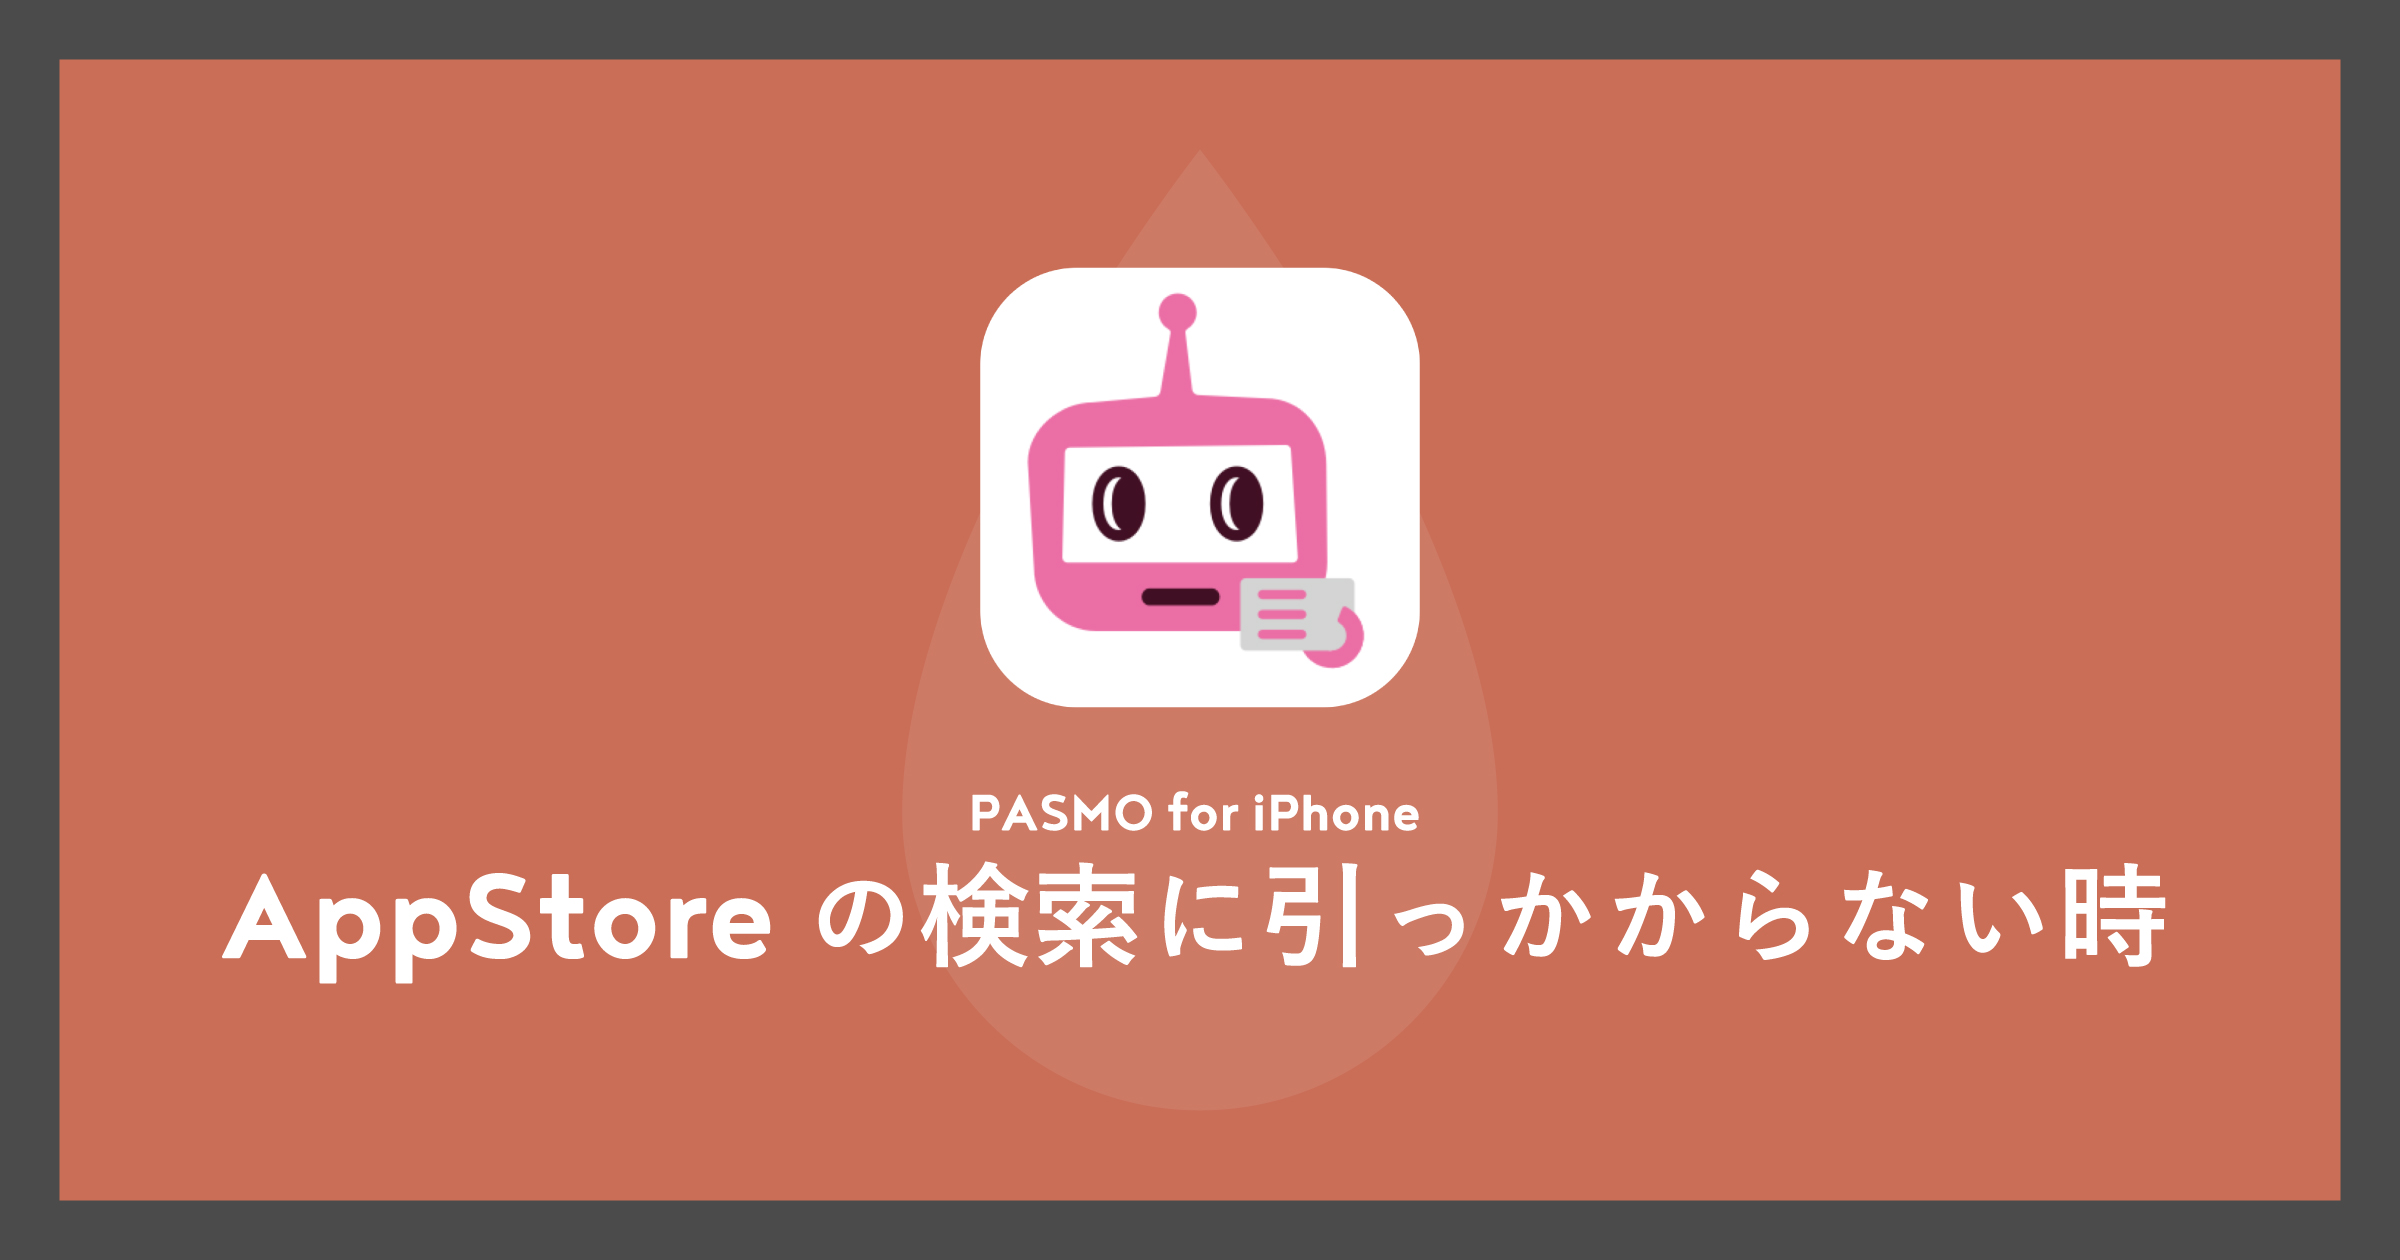 「[iPhone]AppStoreの検索でPASMO（パスモ）が出ない時」のアイキャッチ画像